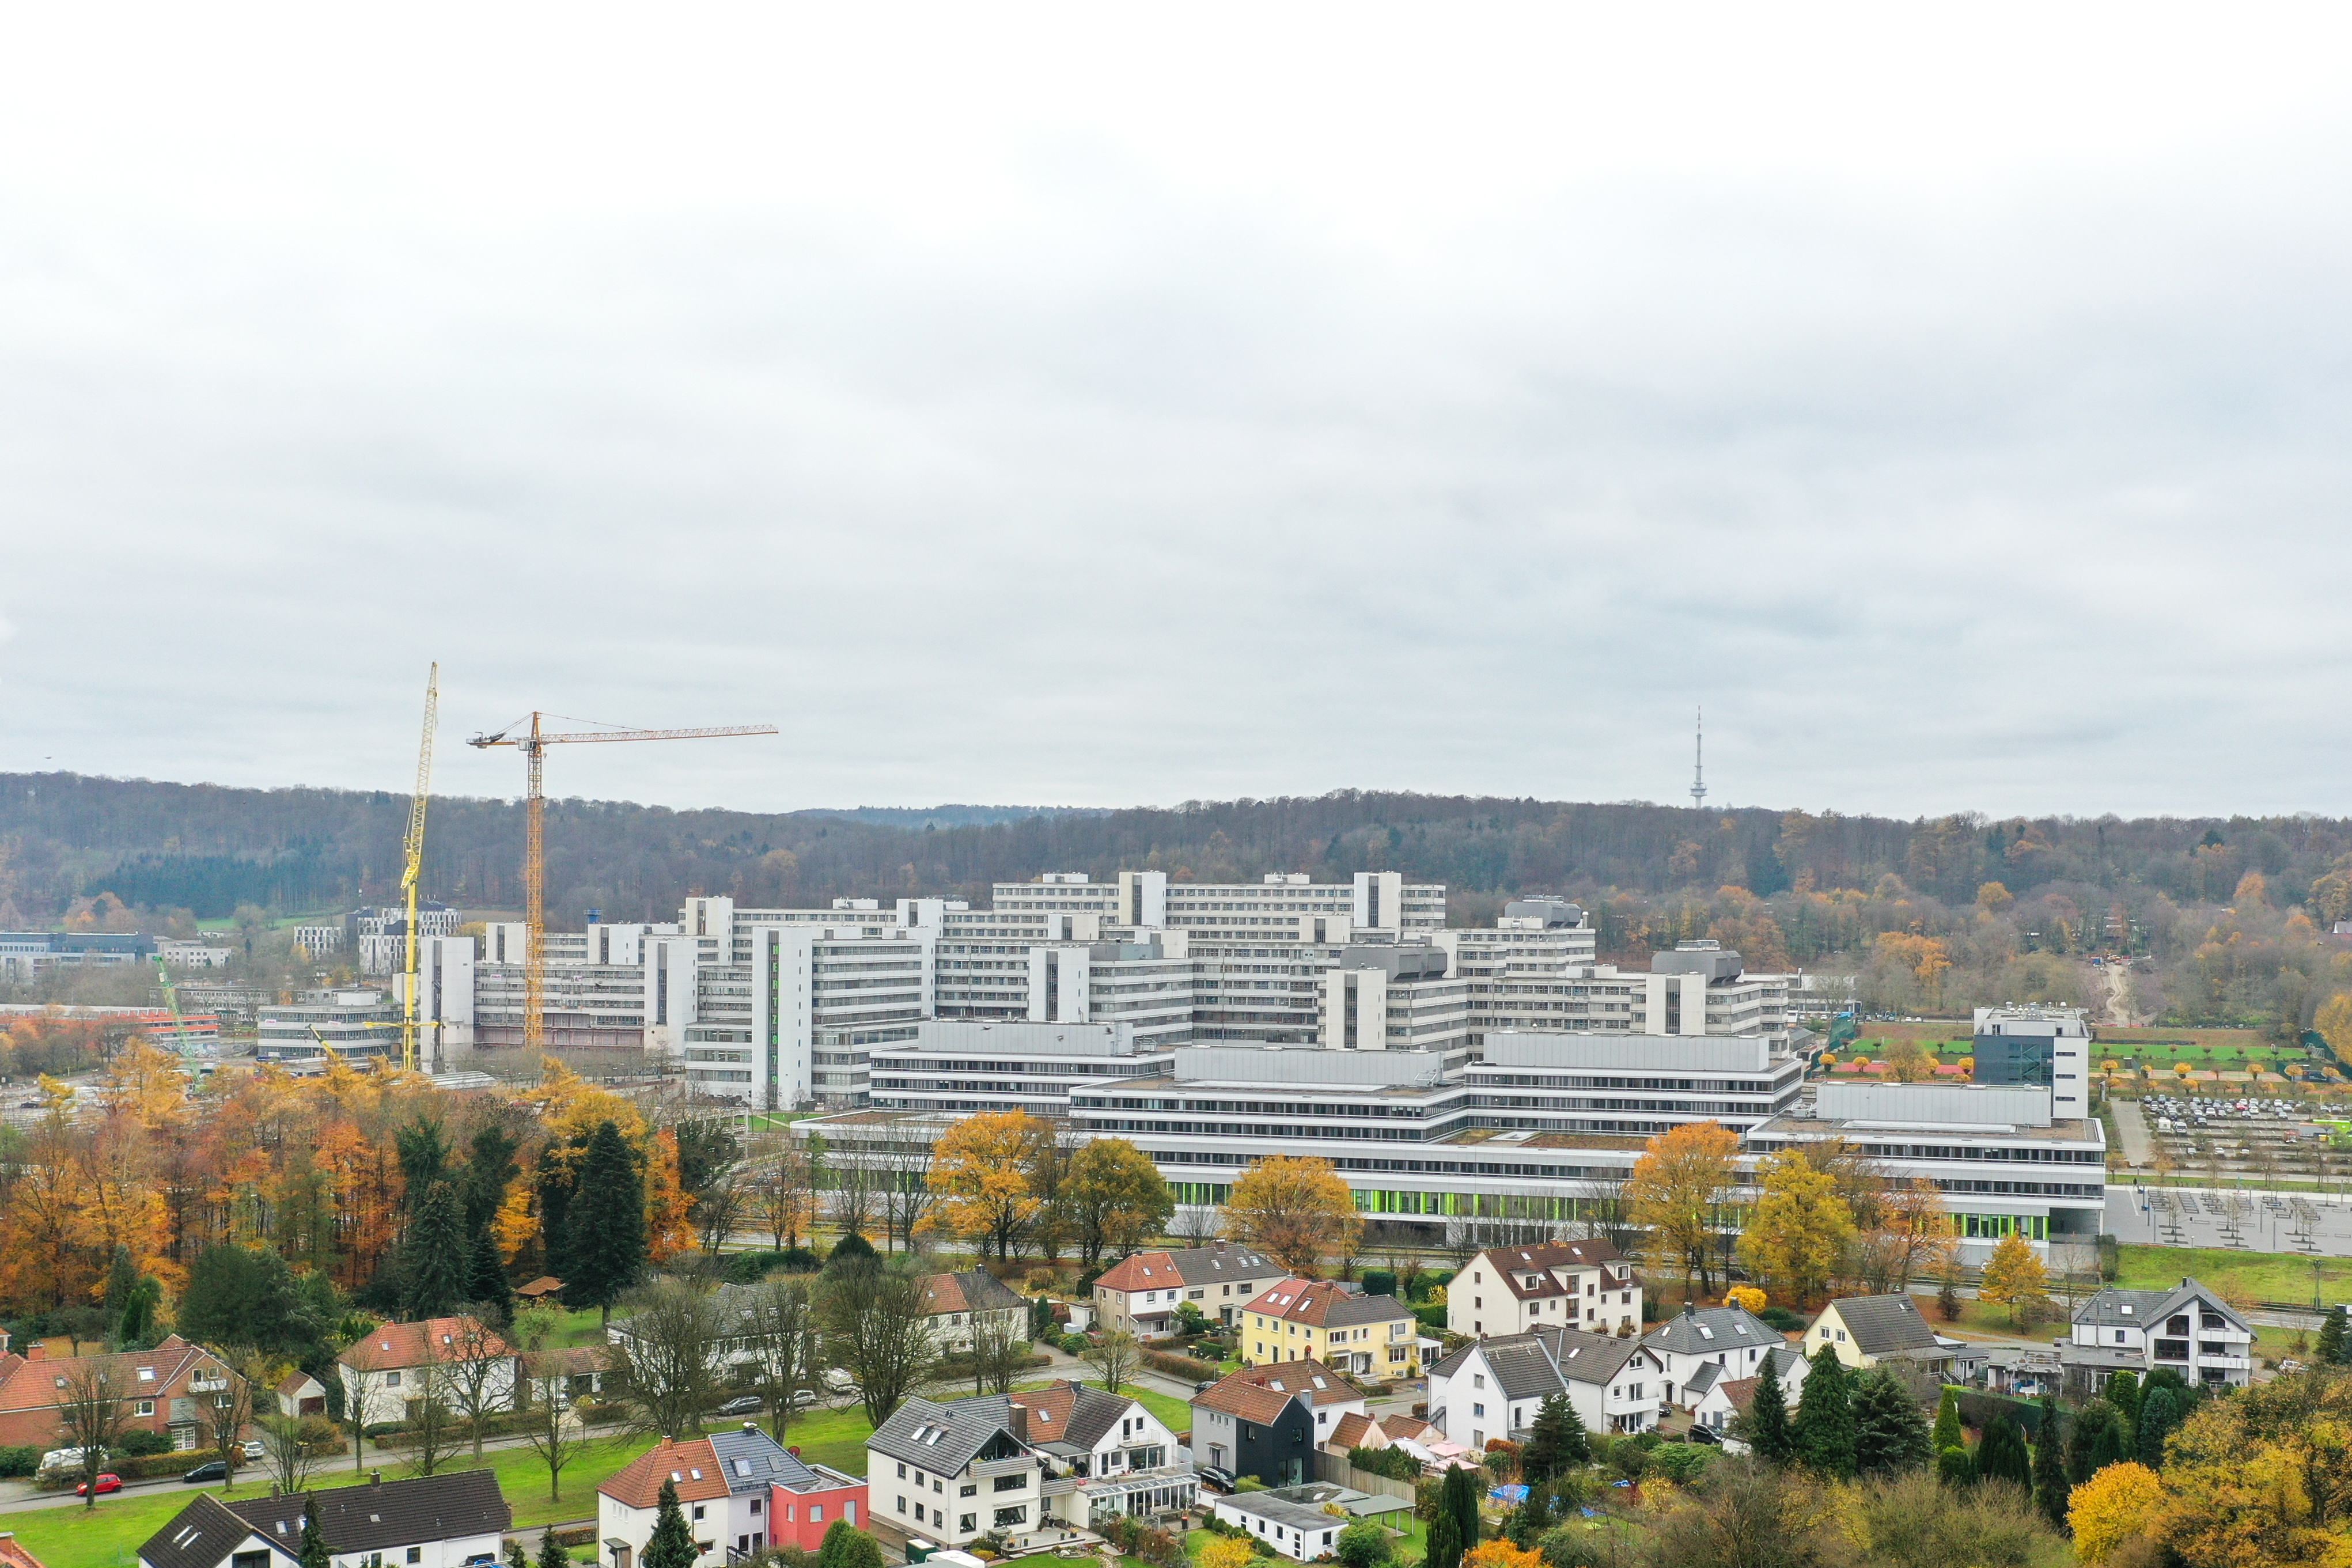 Aerial view of the Bielefeld University